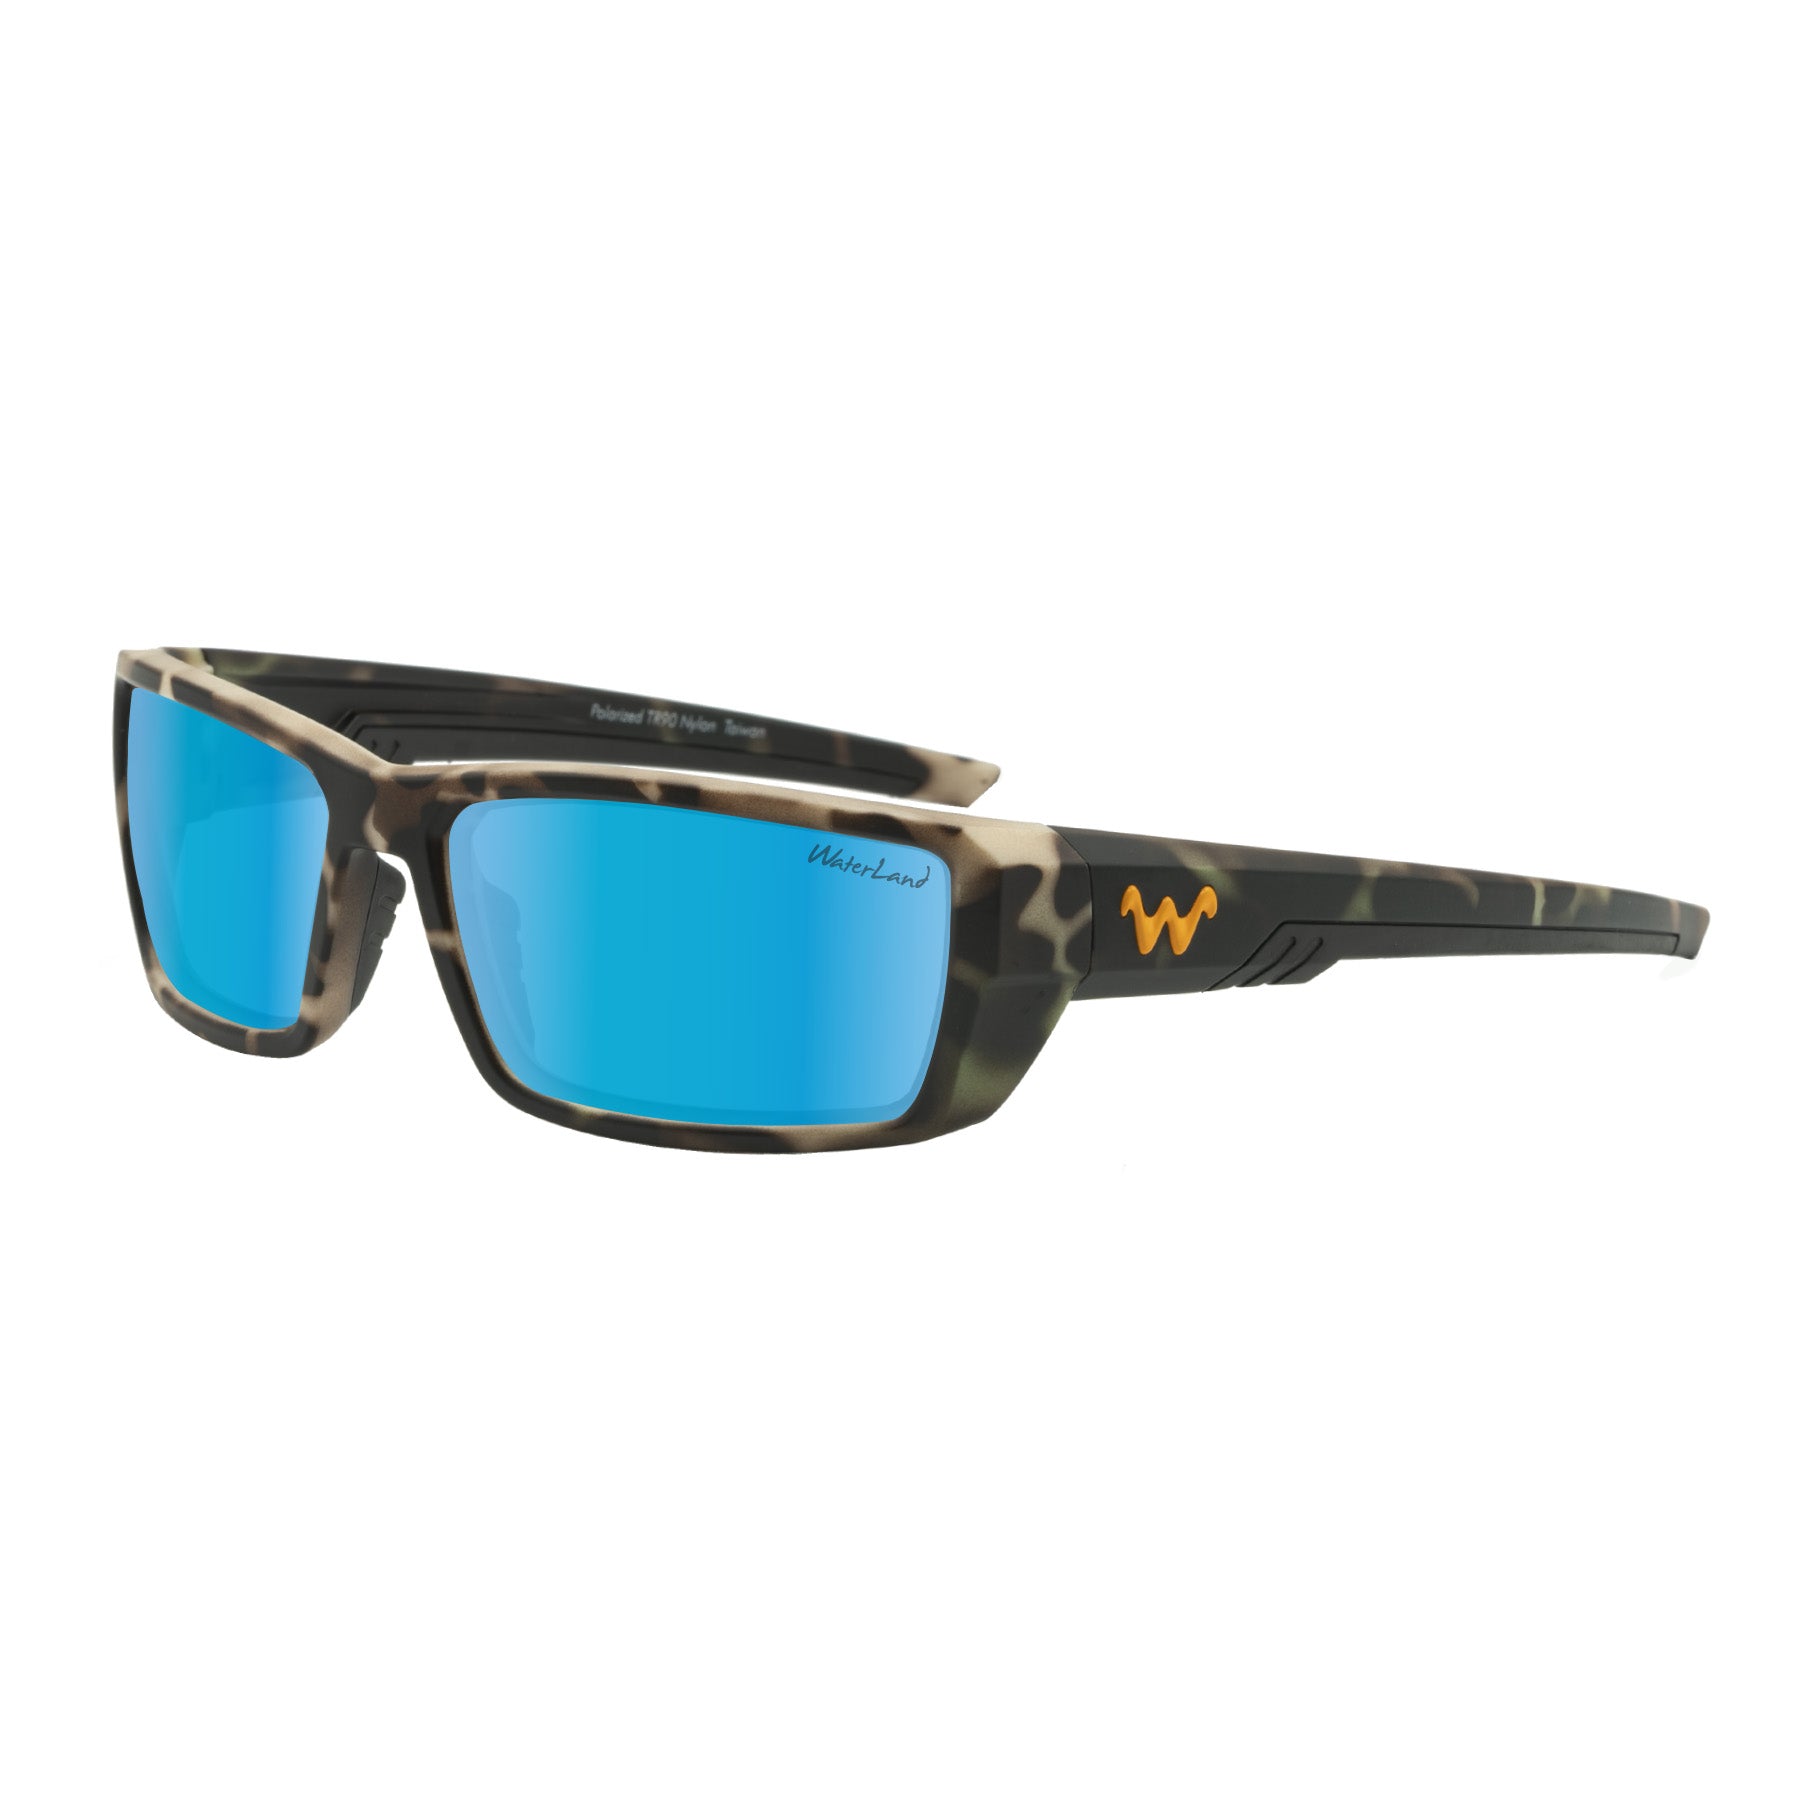 WaterLand Polarized Sunglasses - Ashor Series - WaterWood